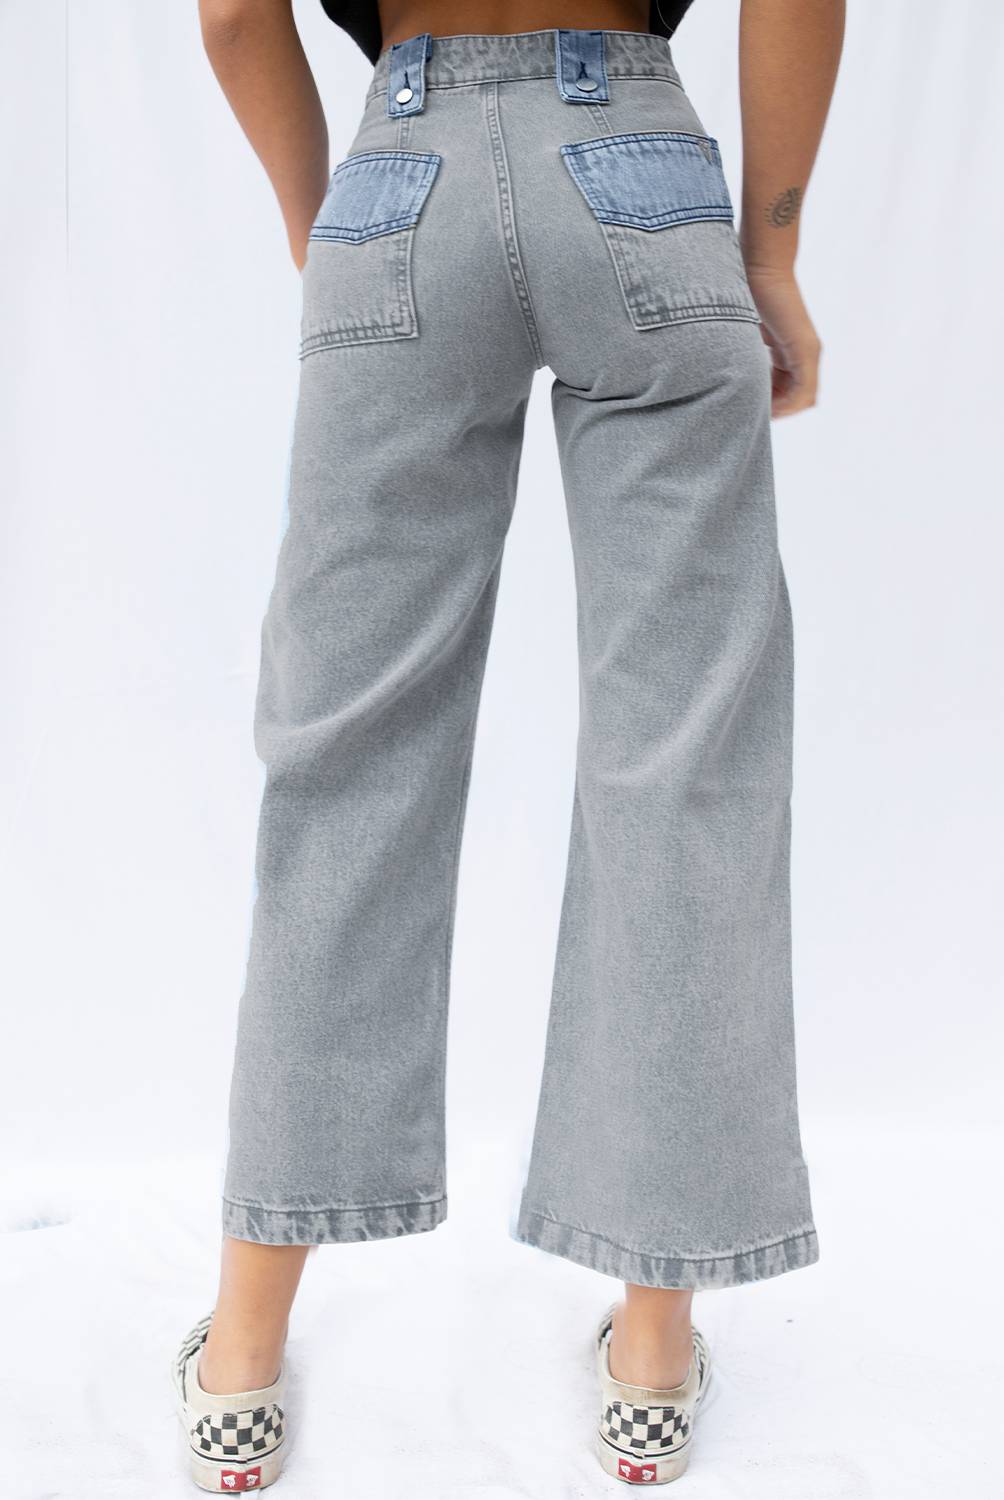 RAINDOOR - Raindoor Jeans Denim Wide Leg Tiro Alto Mujer